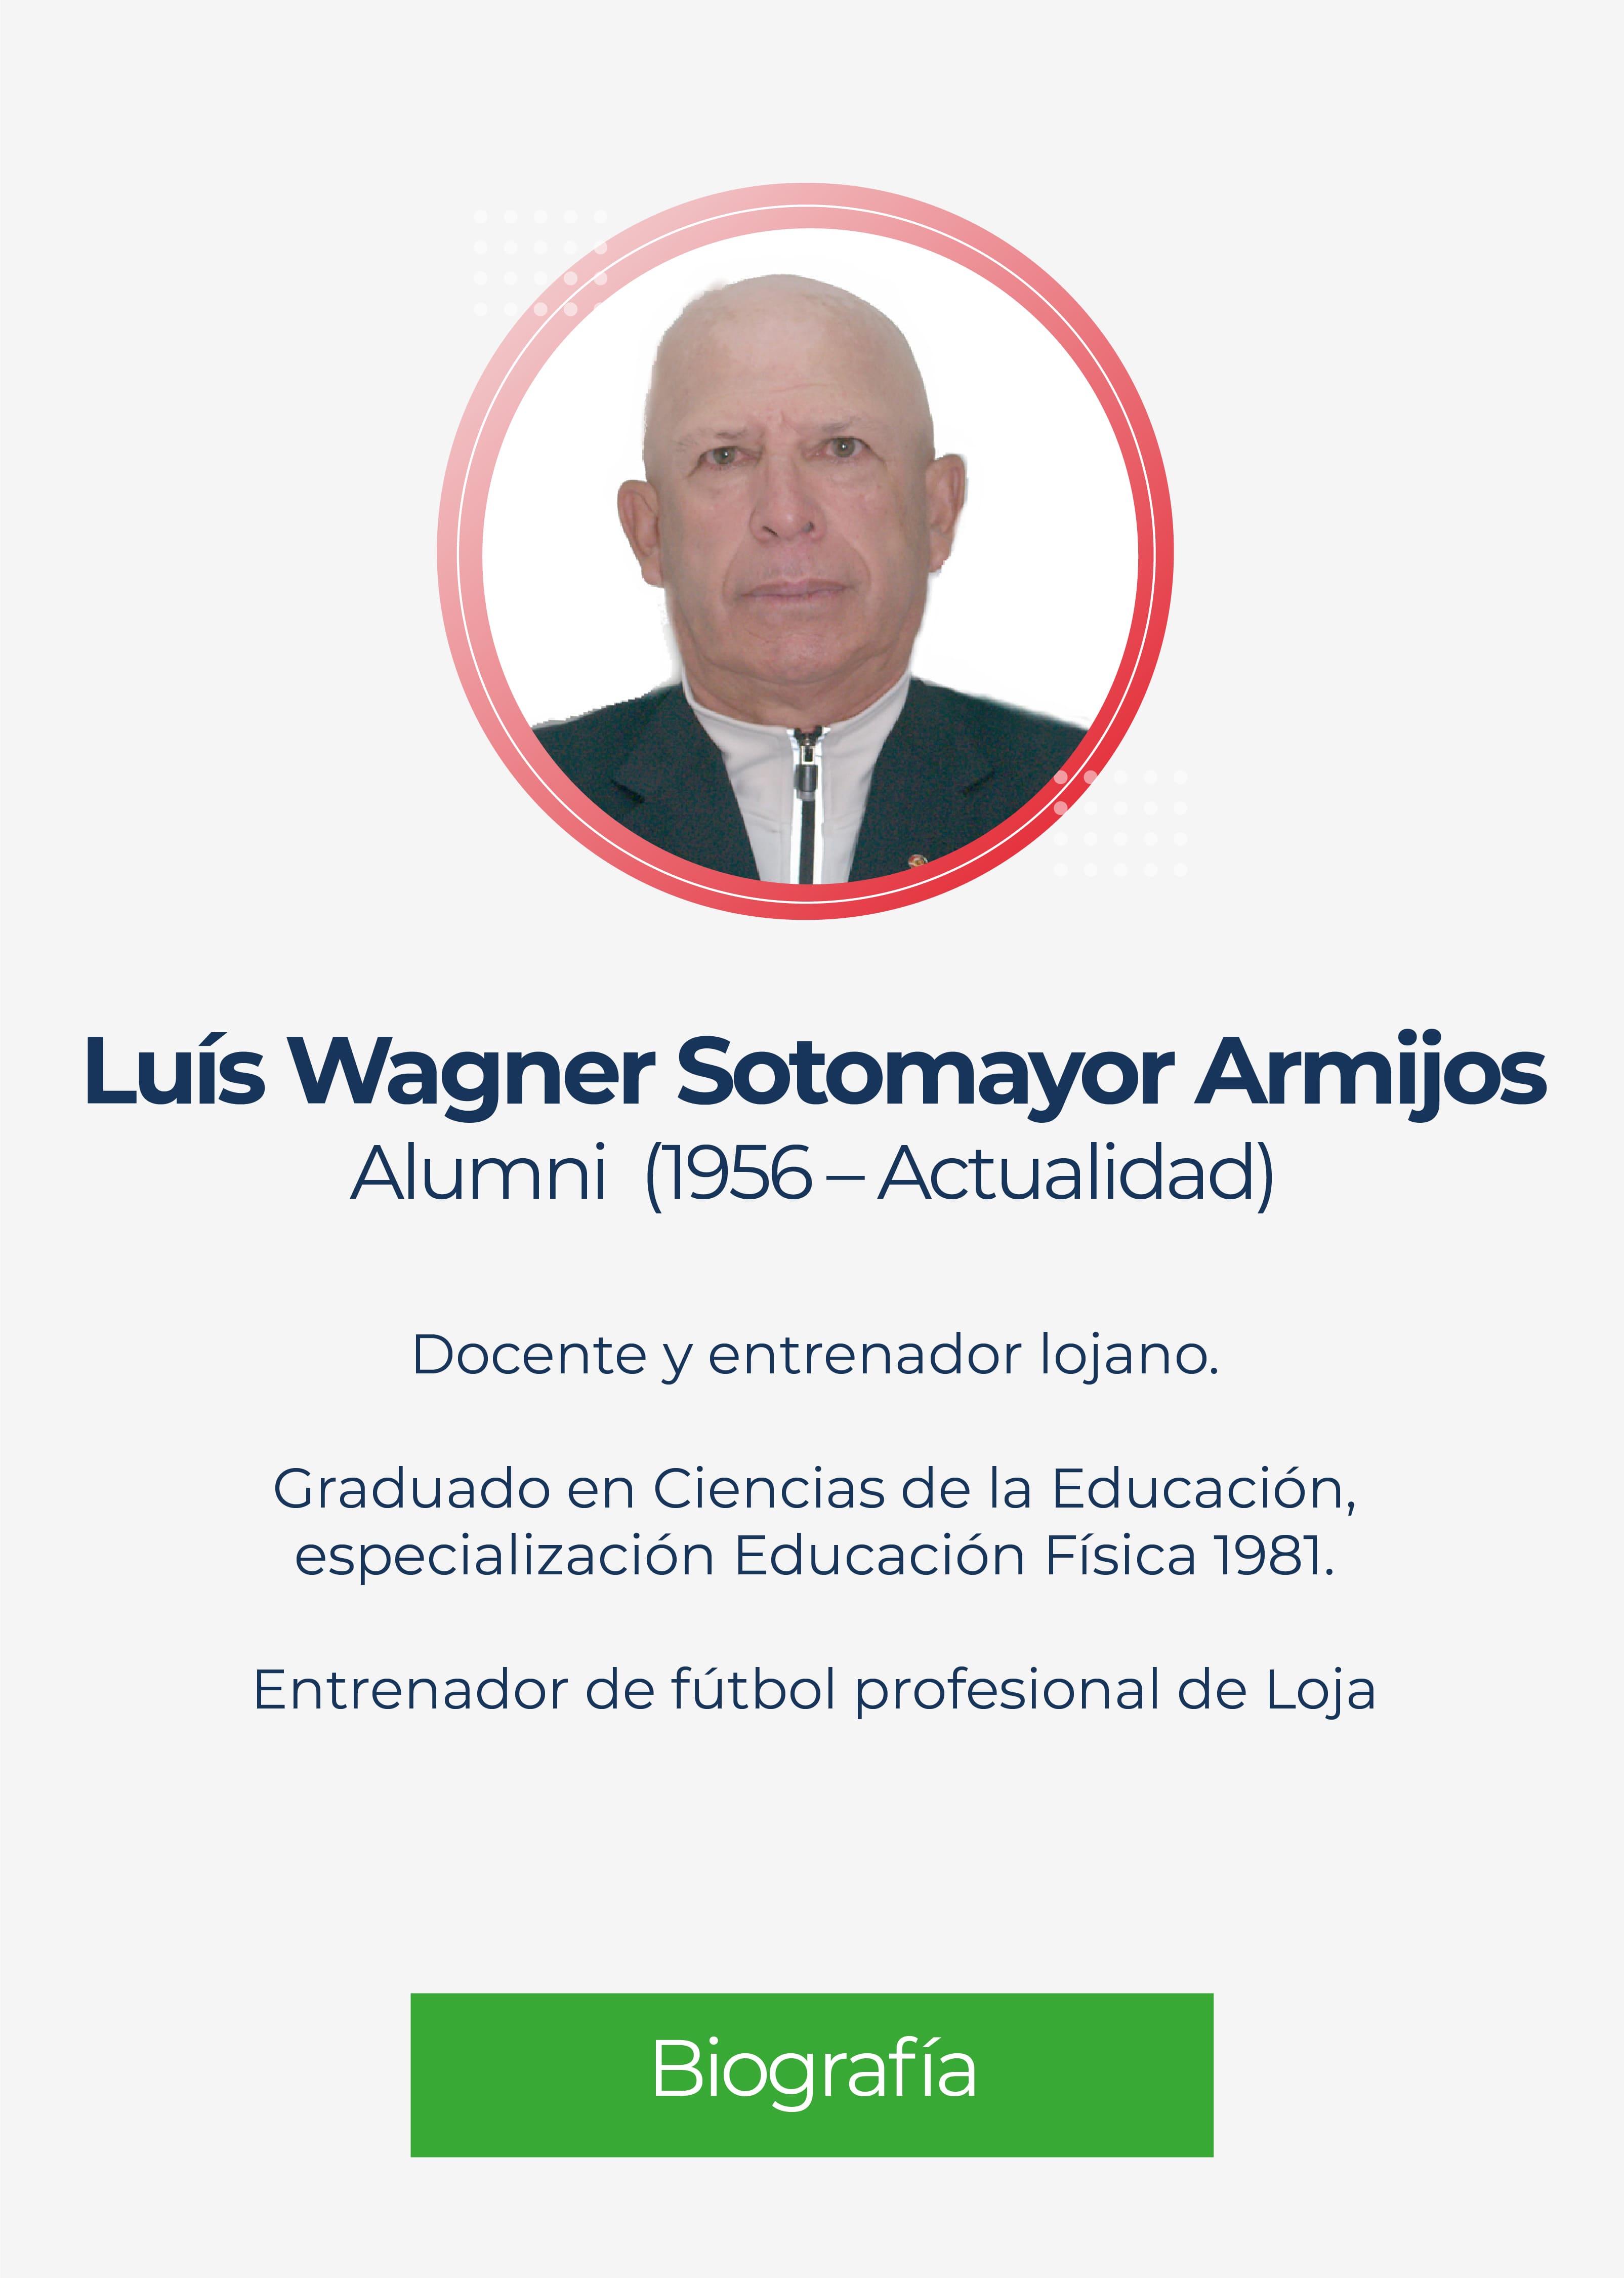 Luis Wagner Sotomayor Armijos